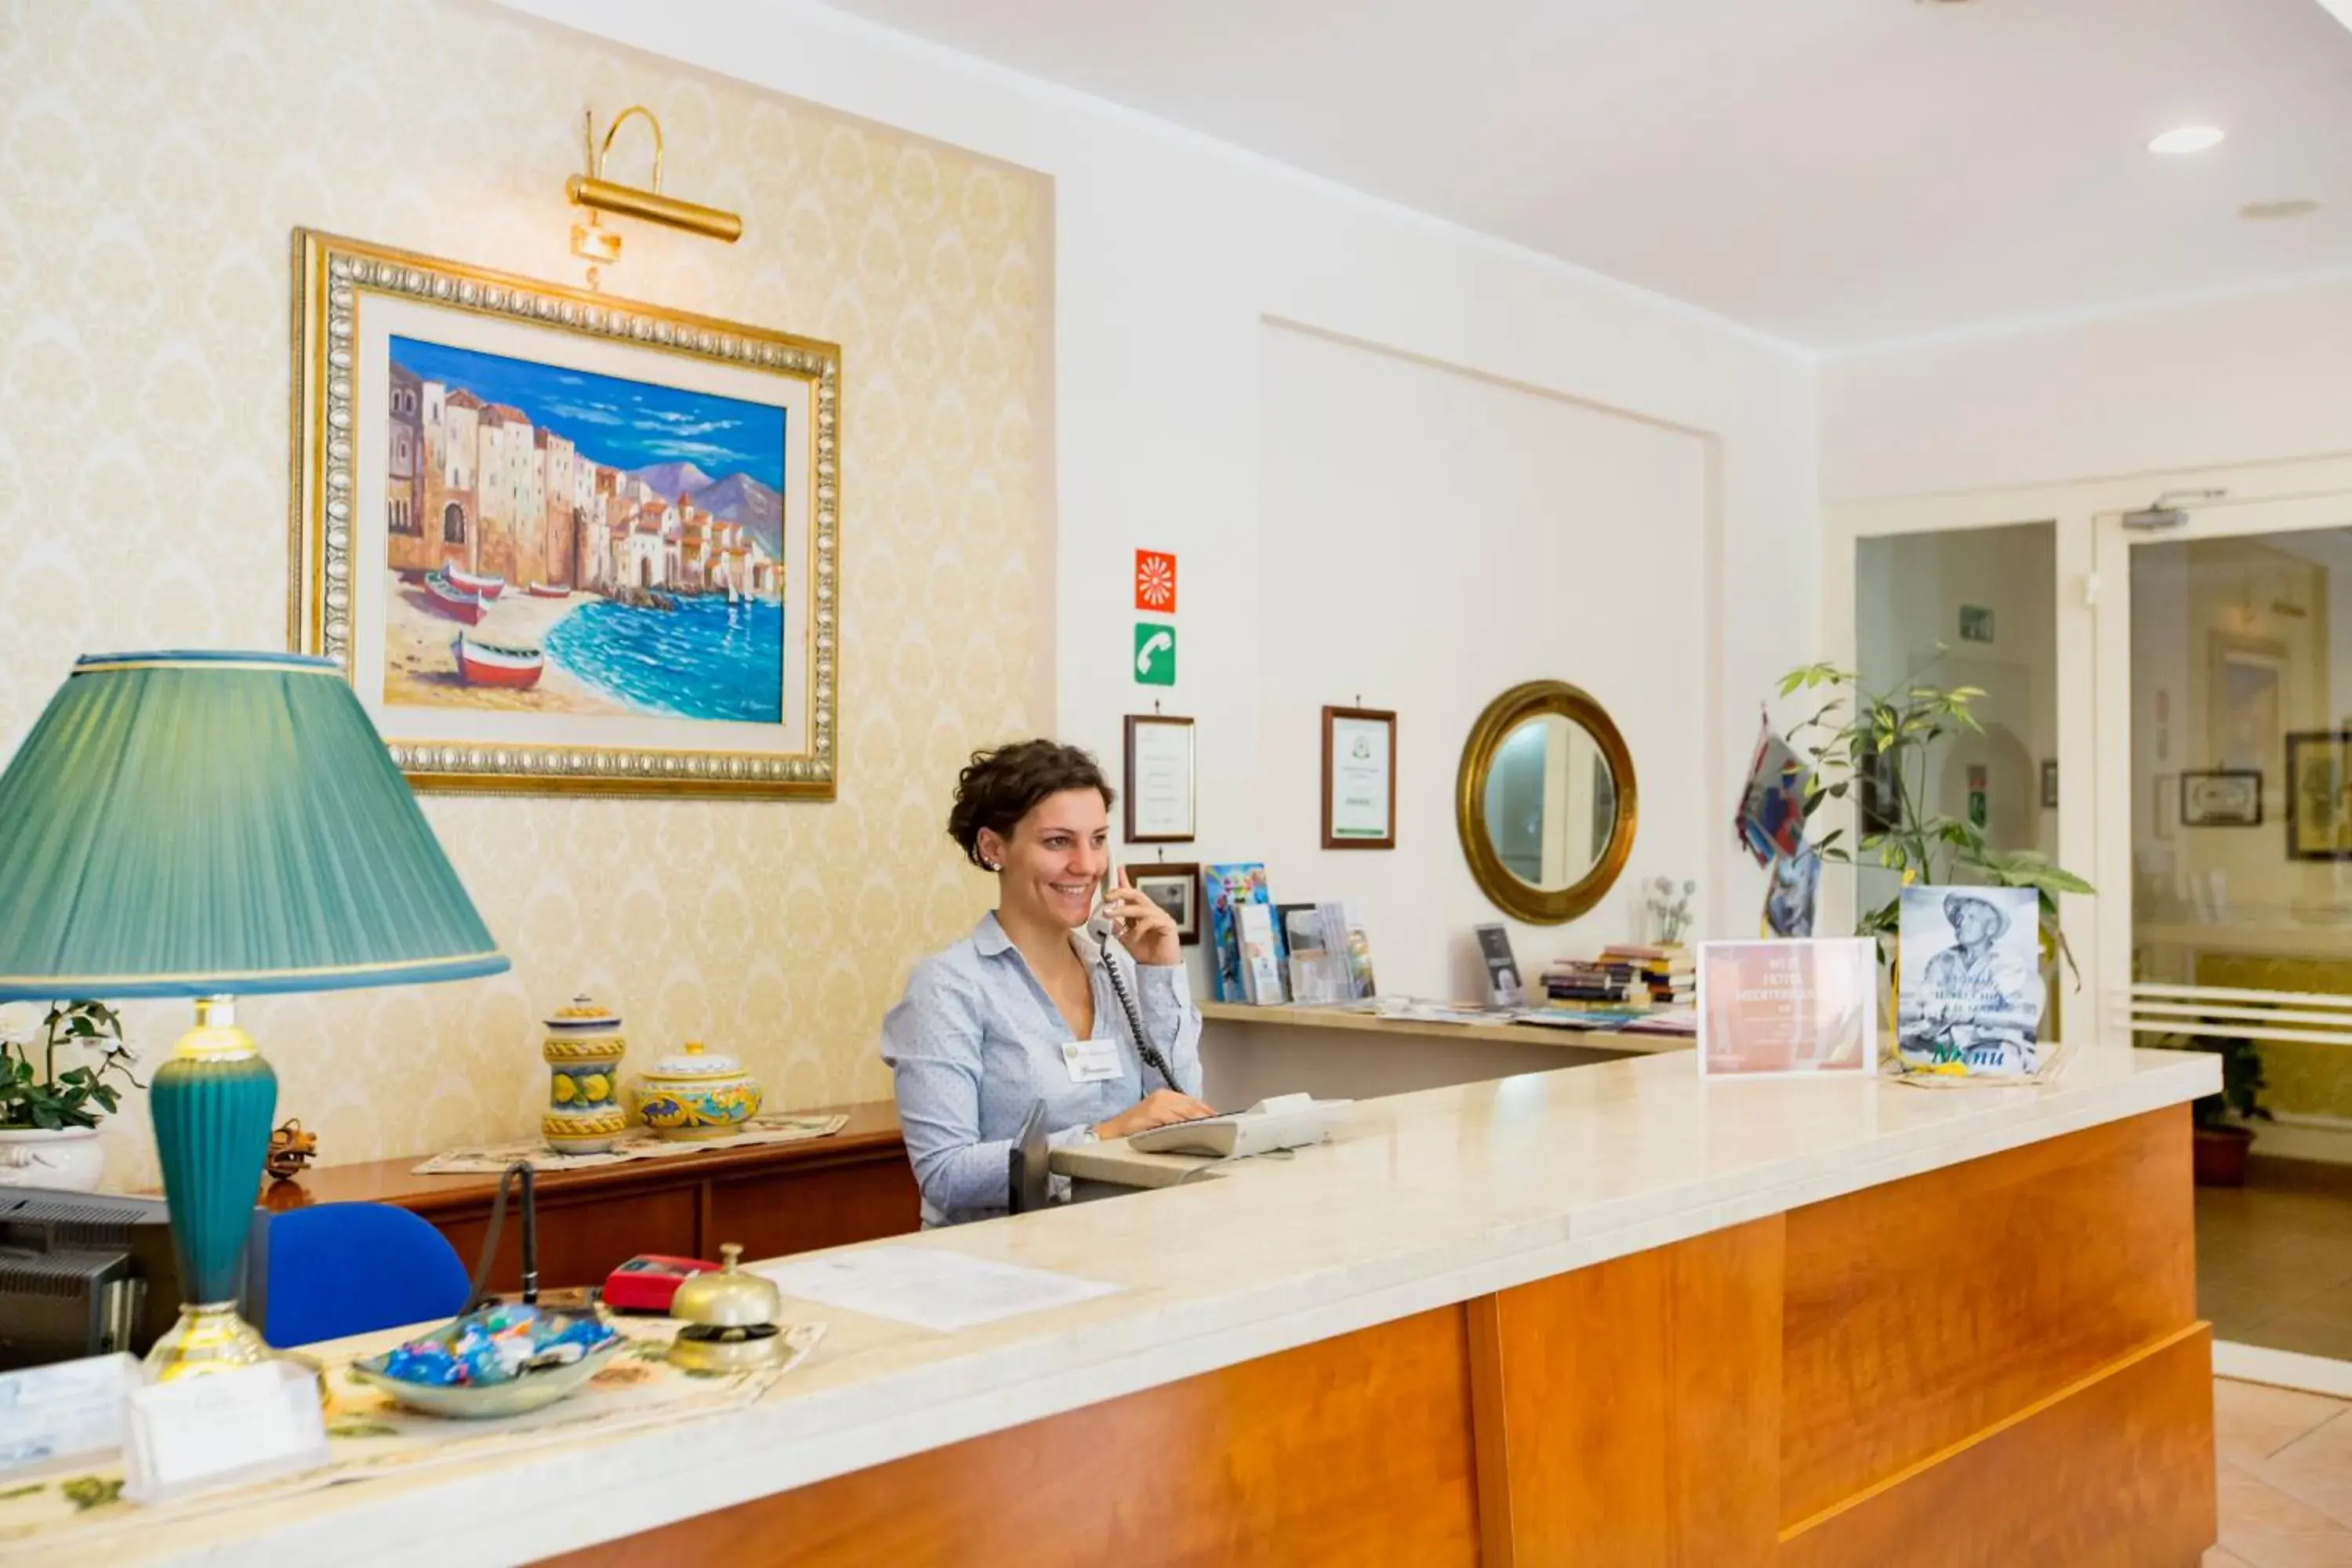 Lobby or reception in Hotel Mediterraneo